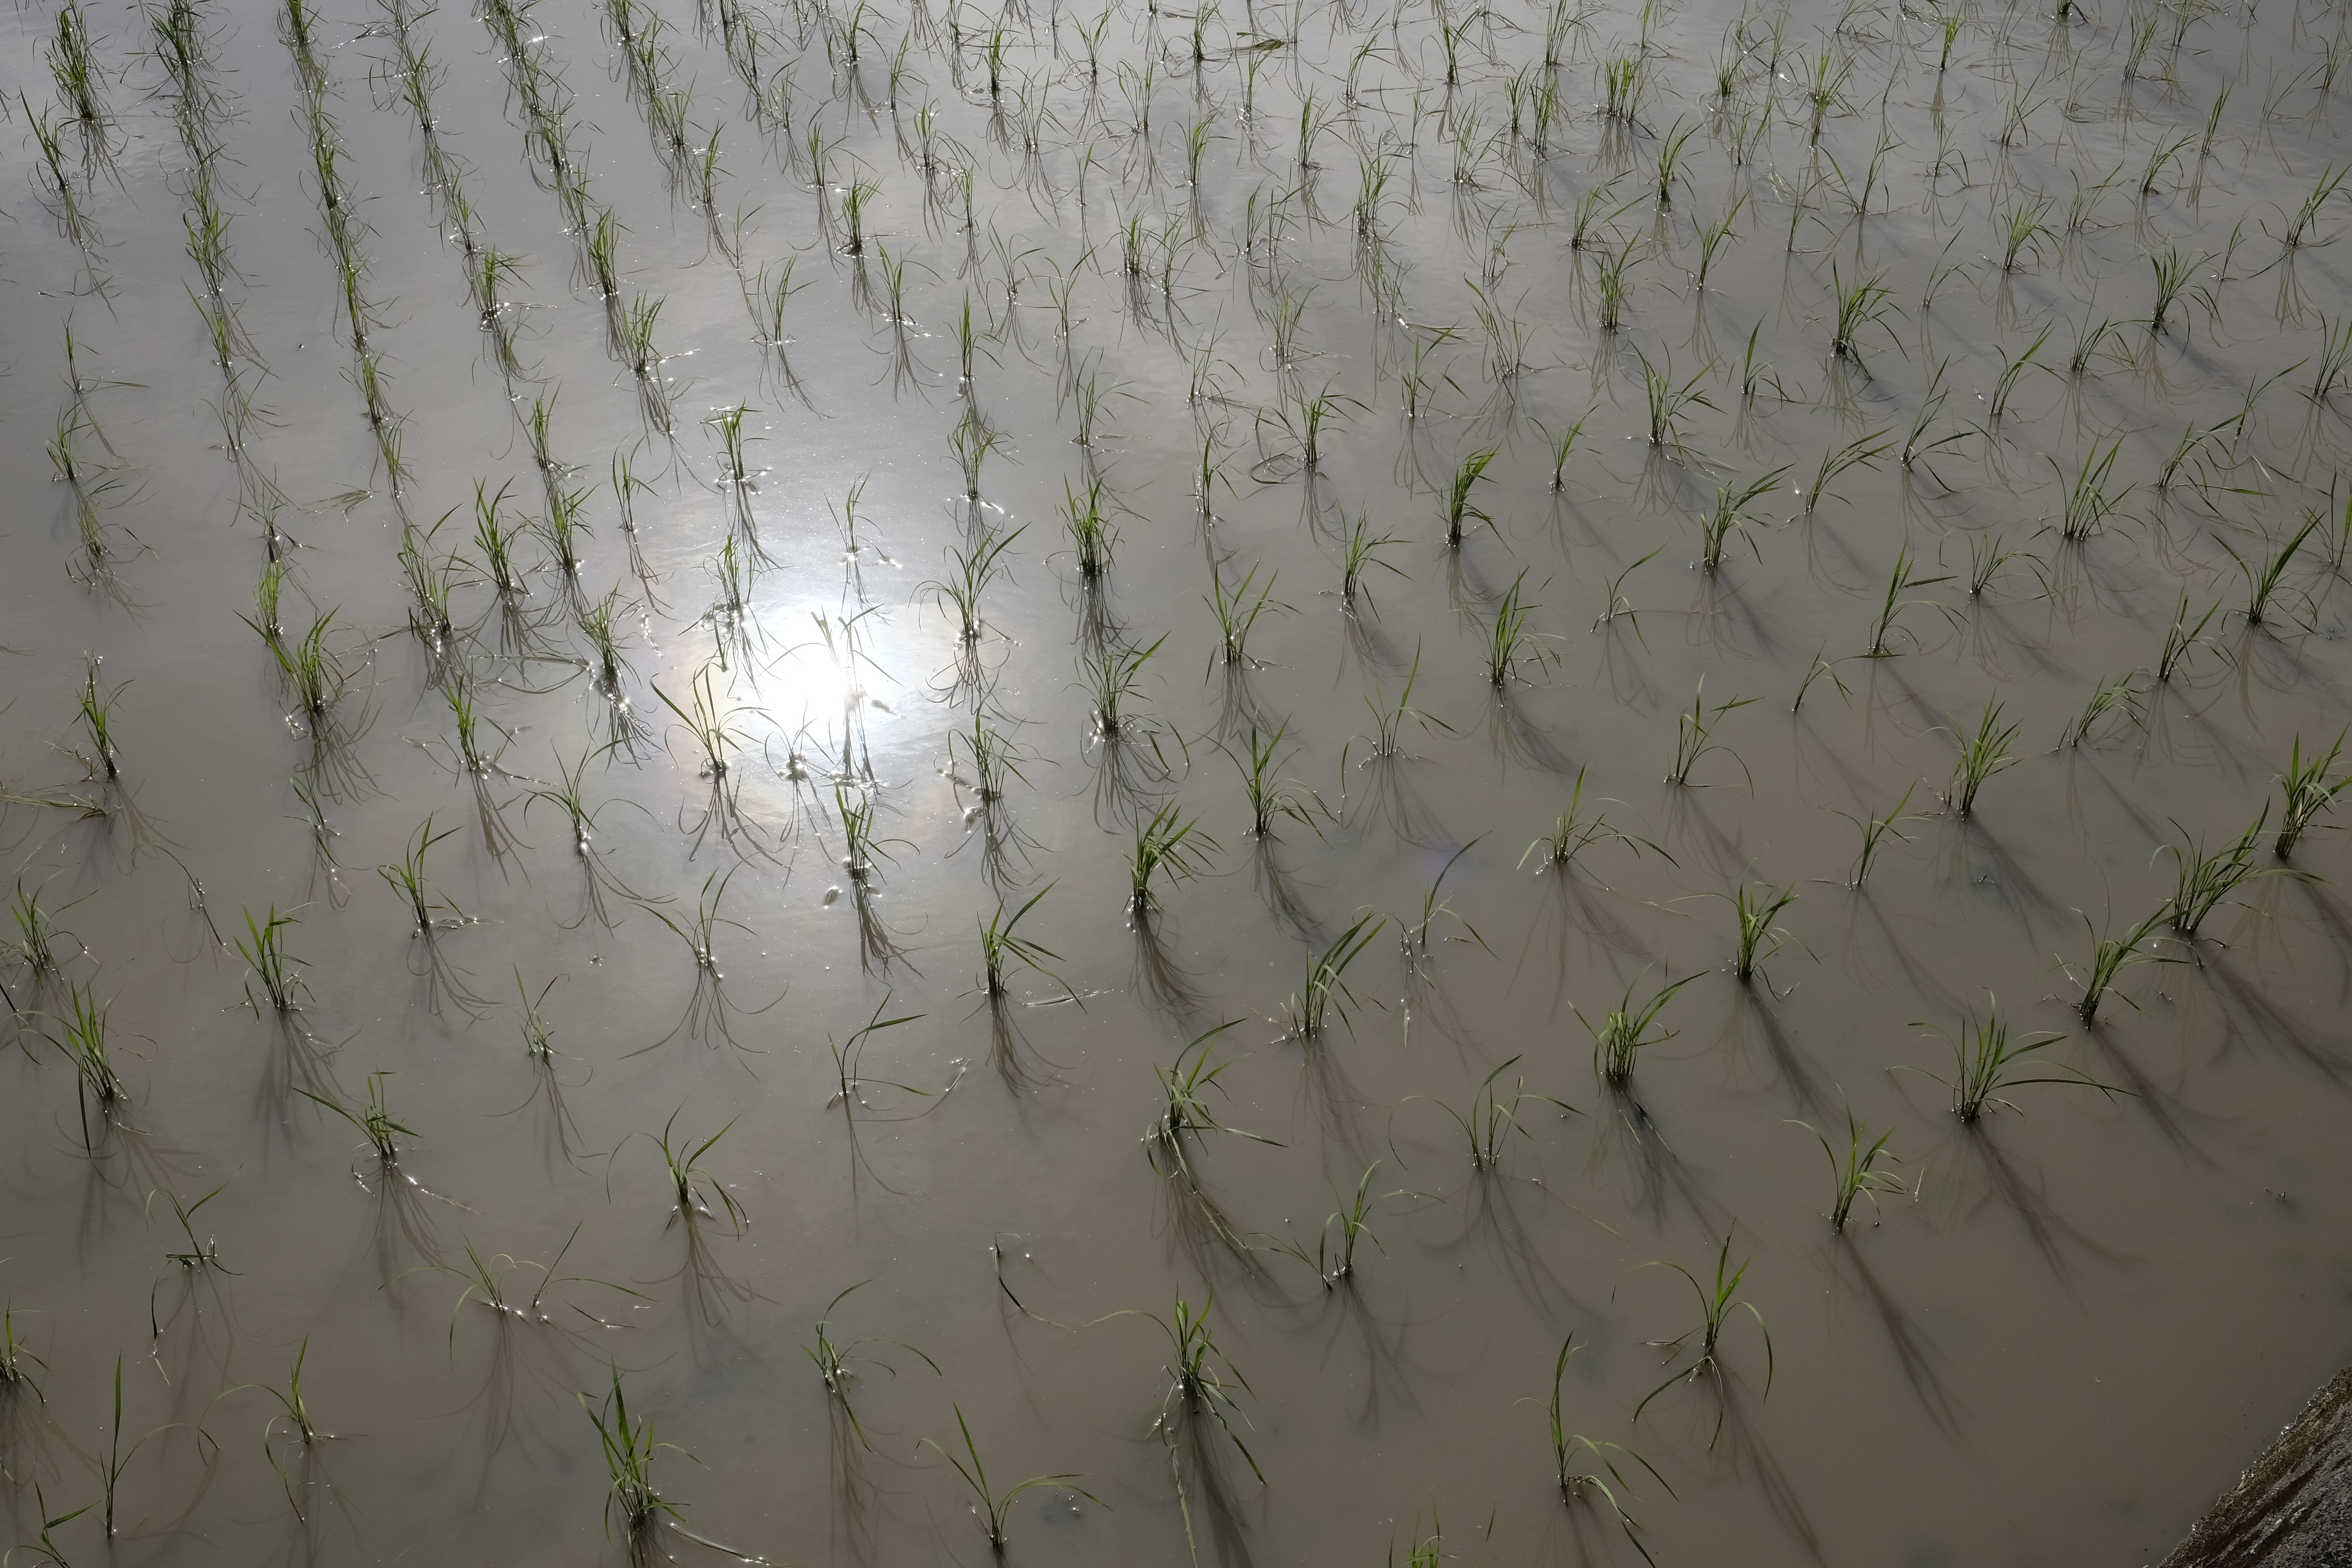 Aratano rice fields